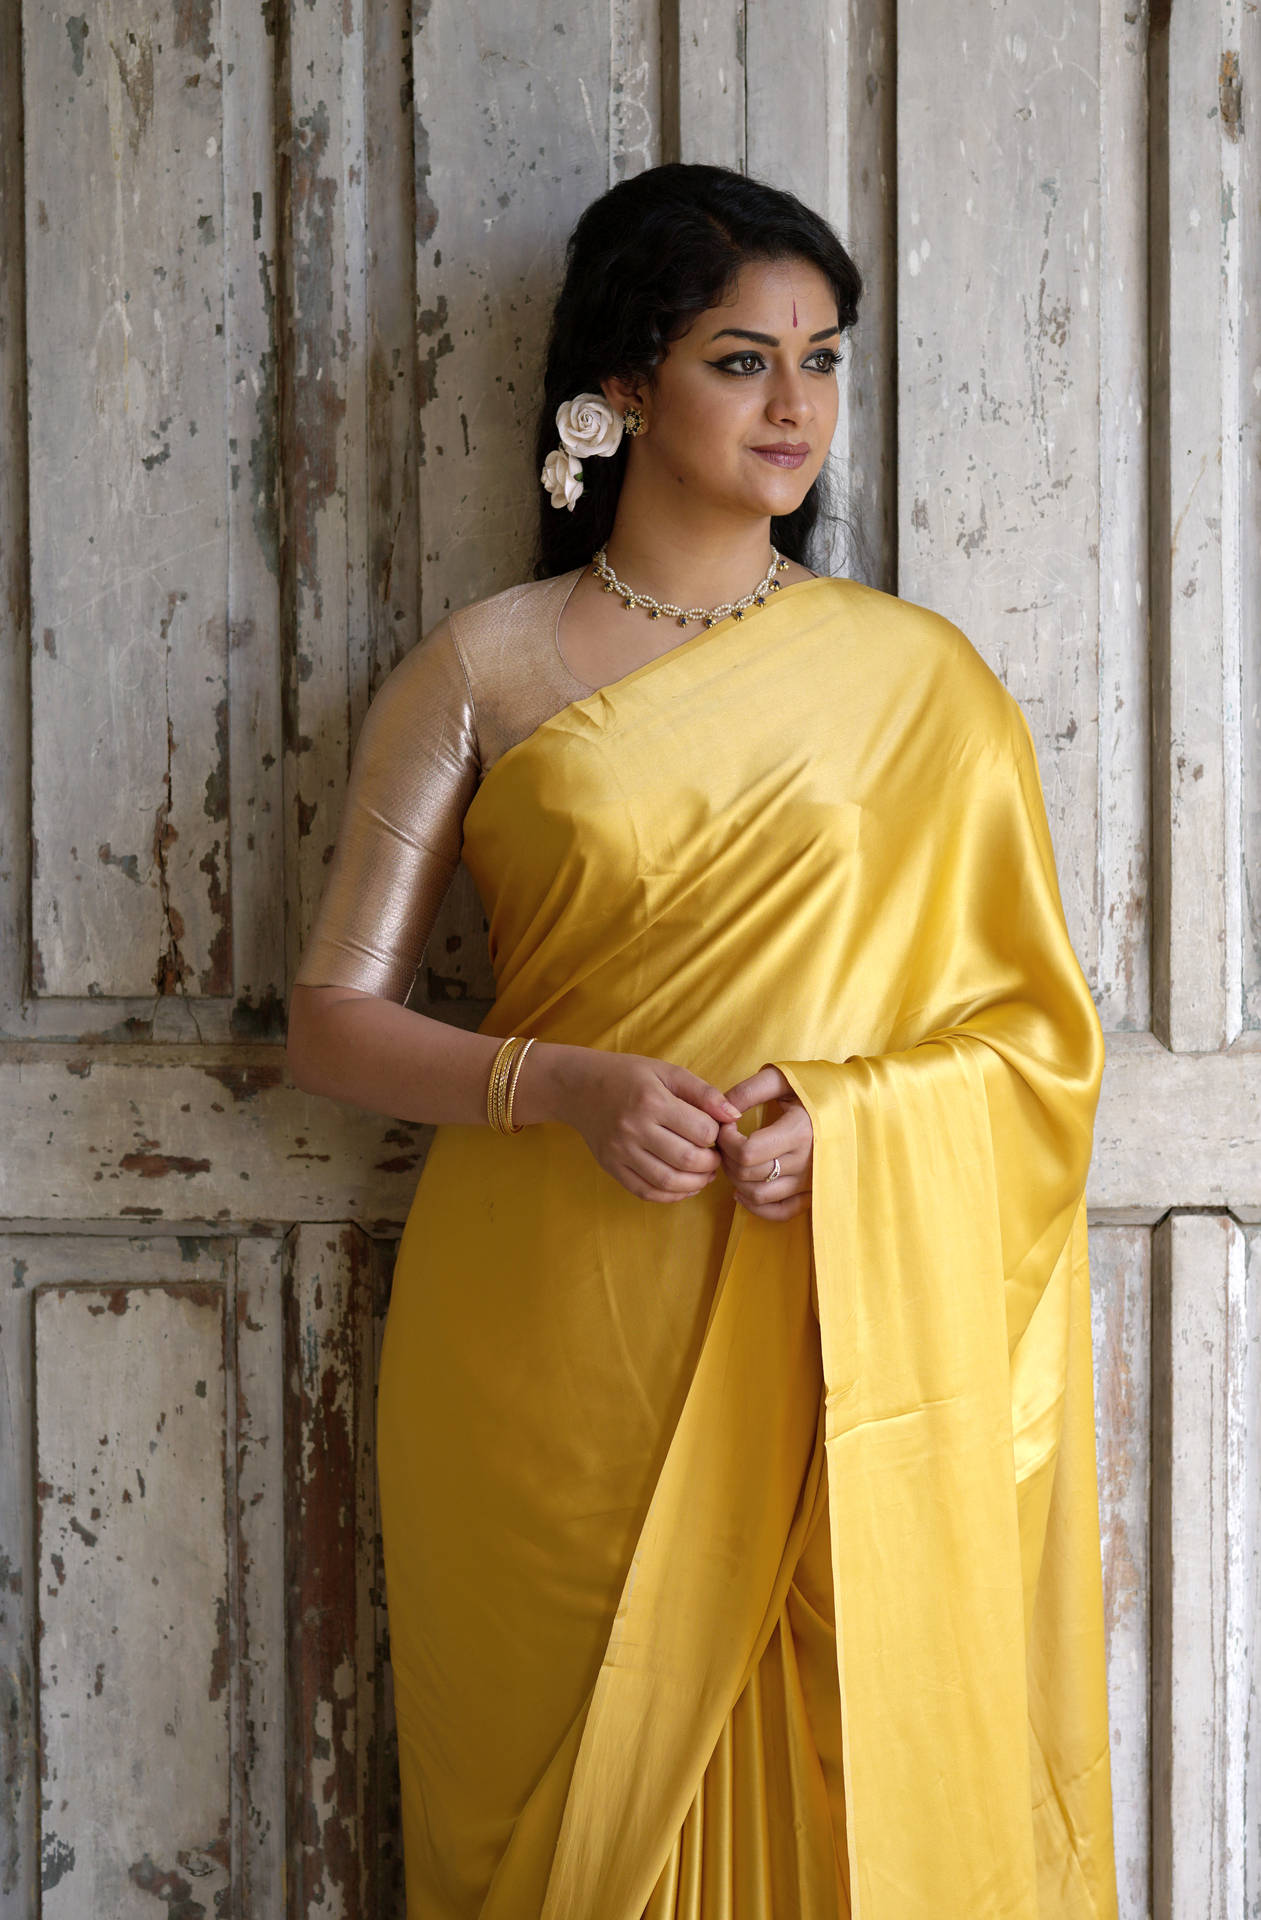 Keerthi Suresh Enchanting In A Golden Yellow Saree Background